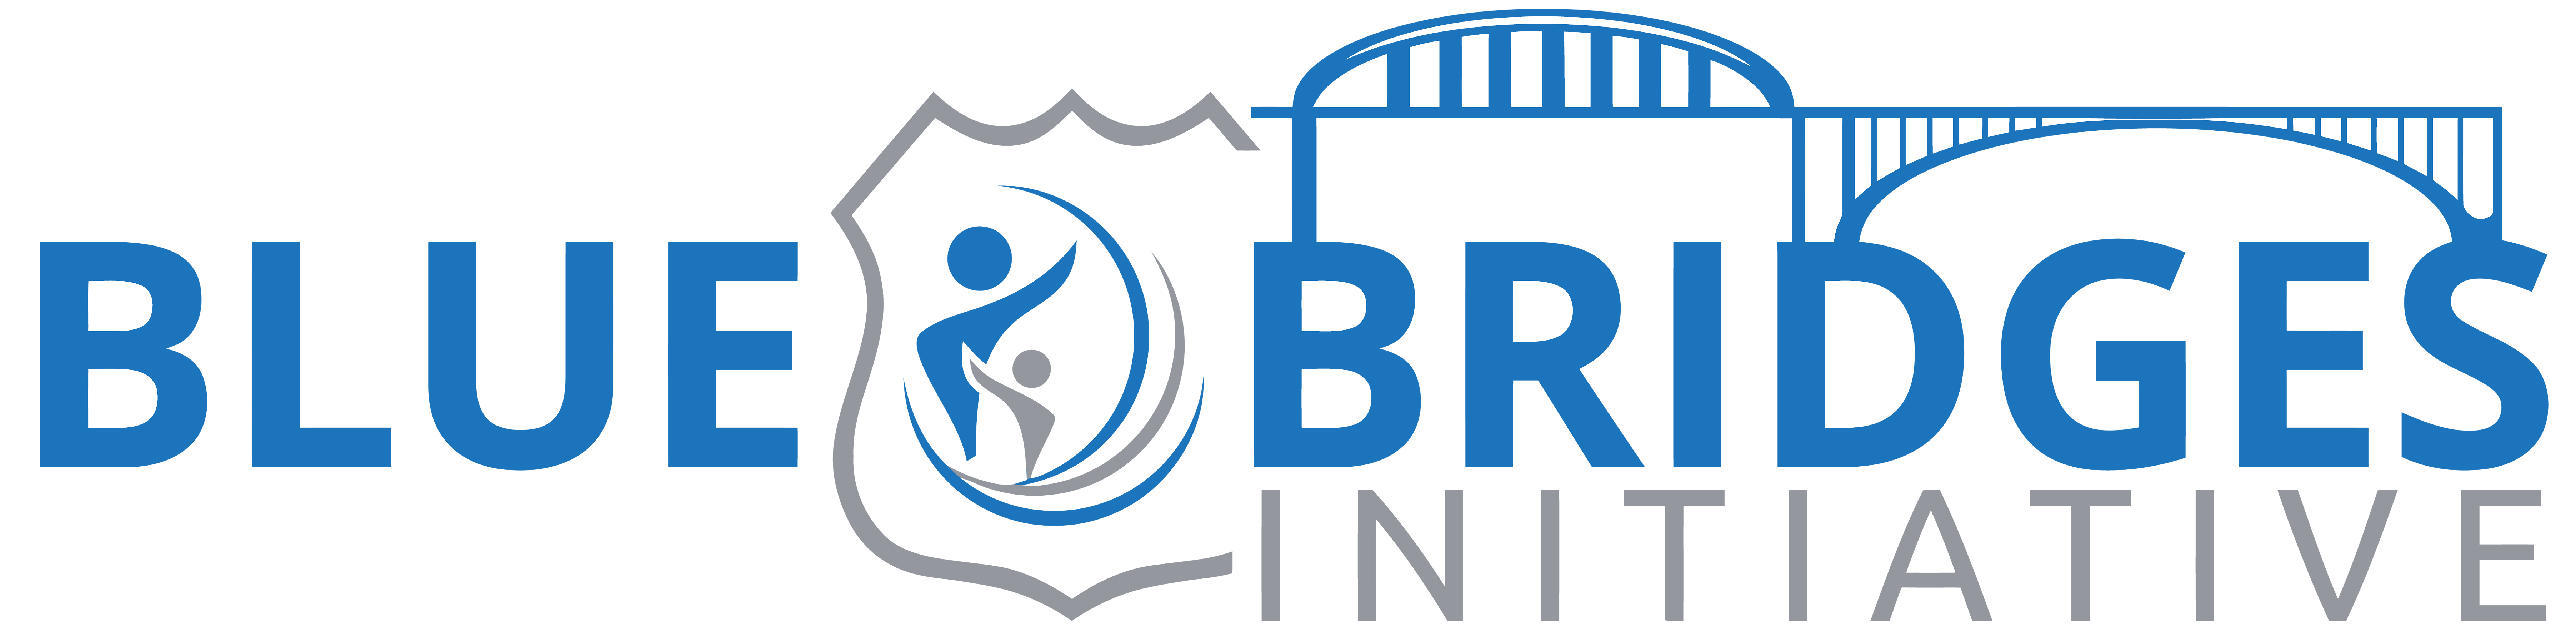 Blue Bridges Initiative logo